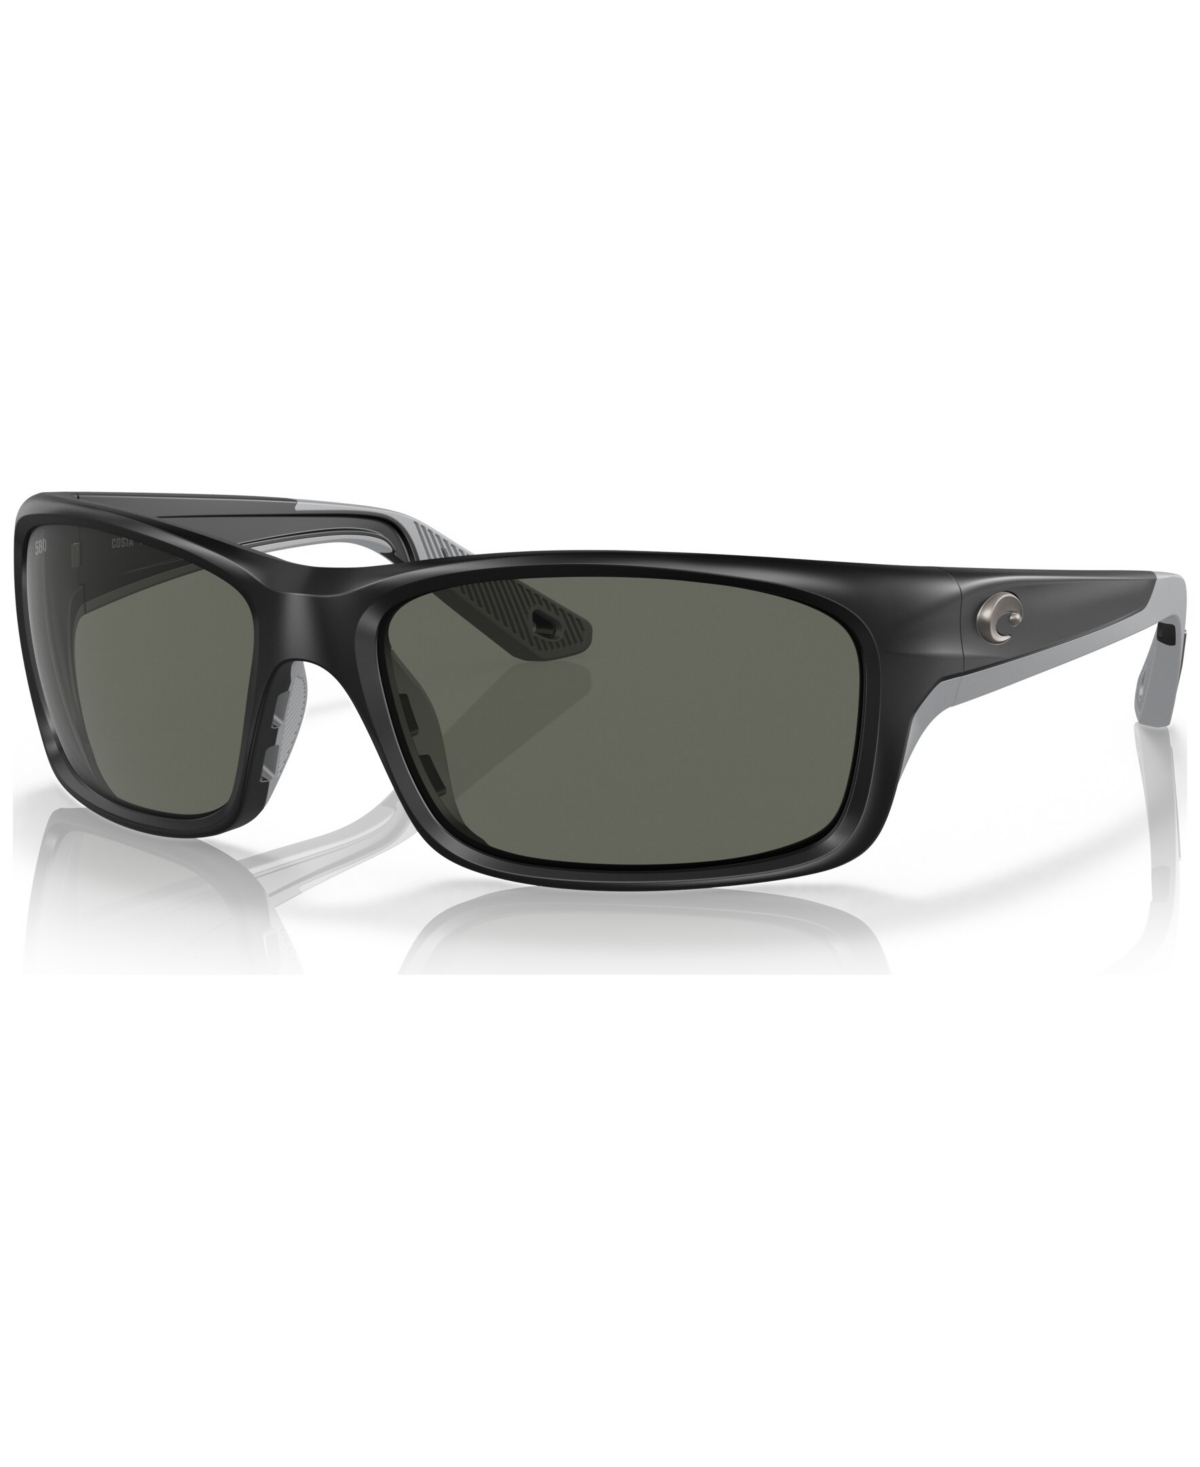 Men's Polarized Sunglasses, 6S9106-04 - Matte Black